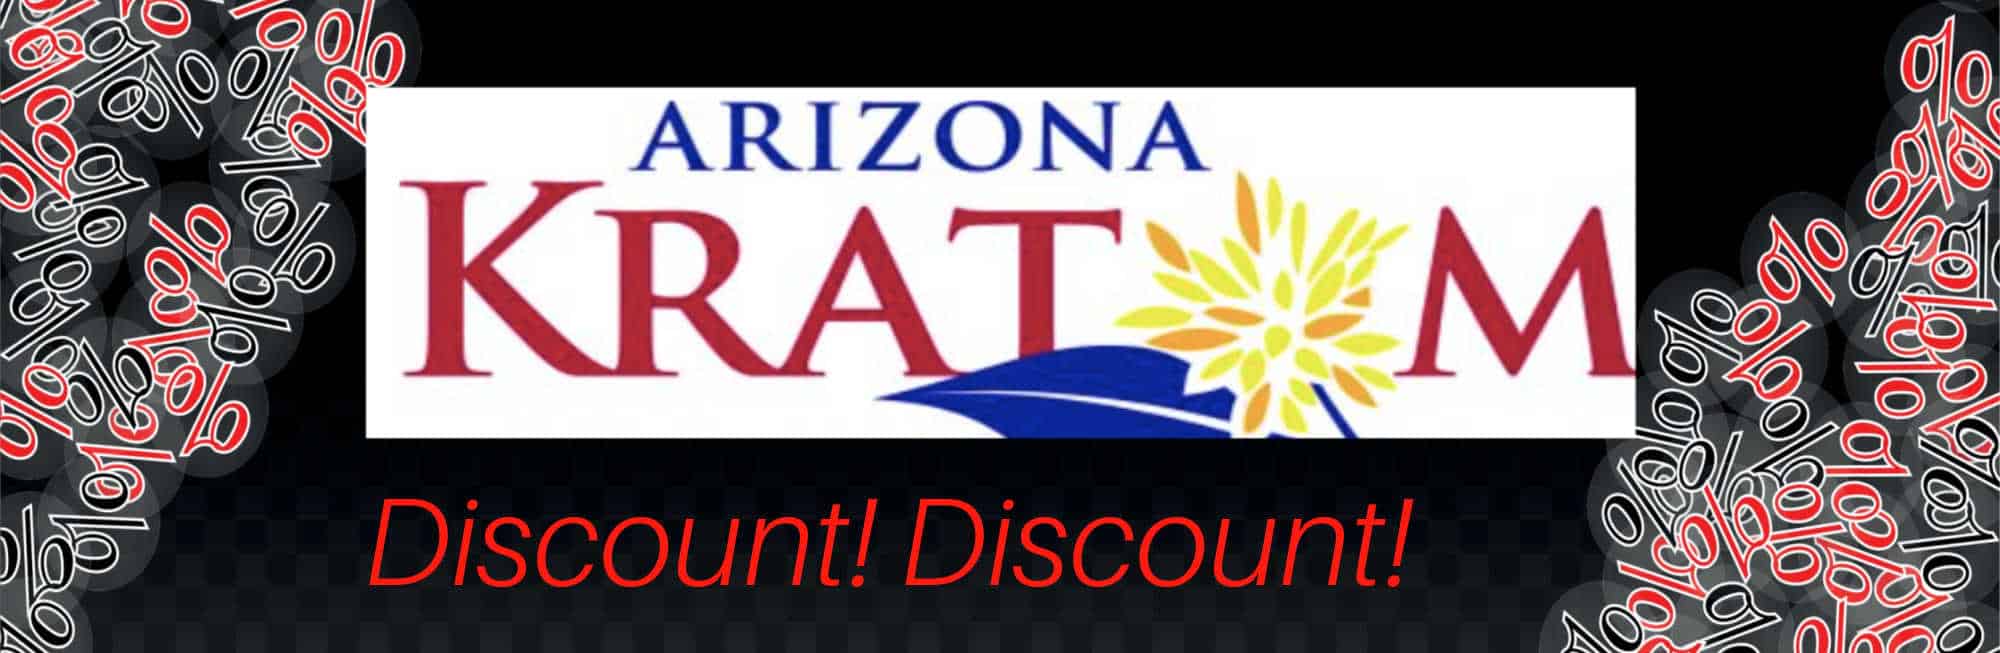 image of arizona kratom coupon code and discount